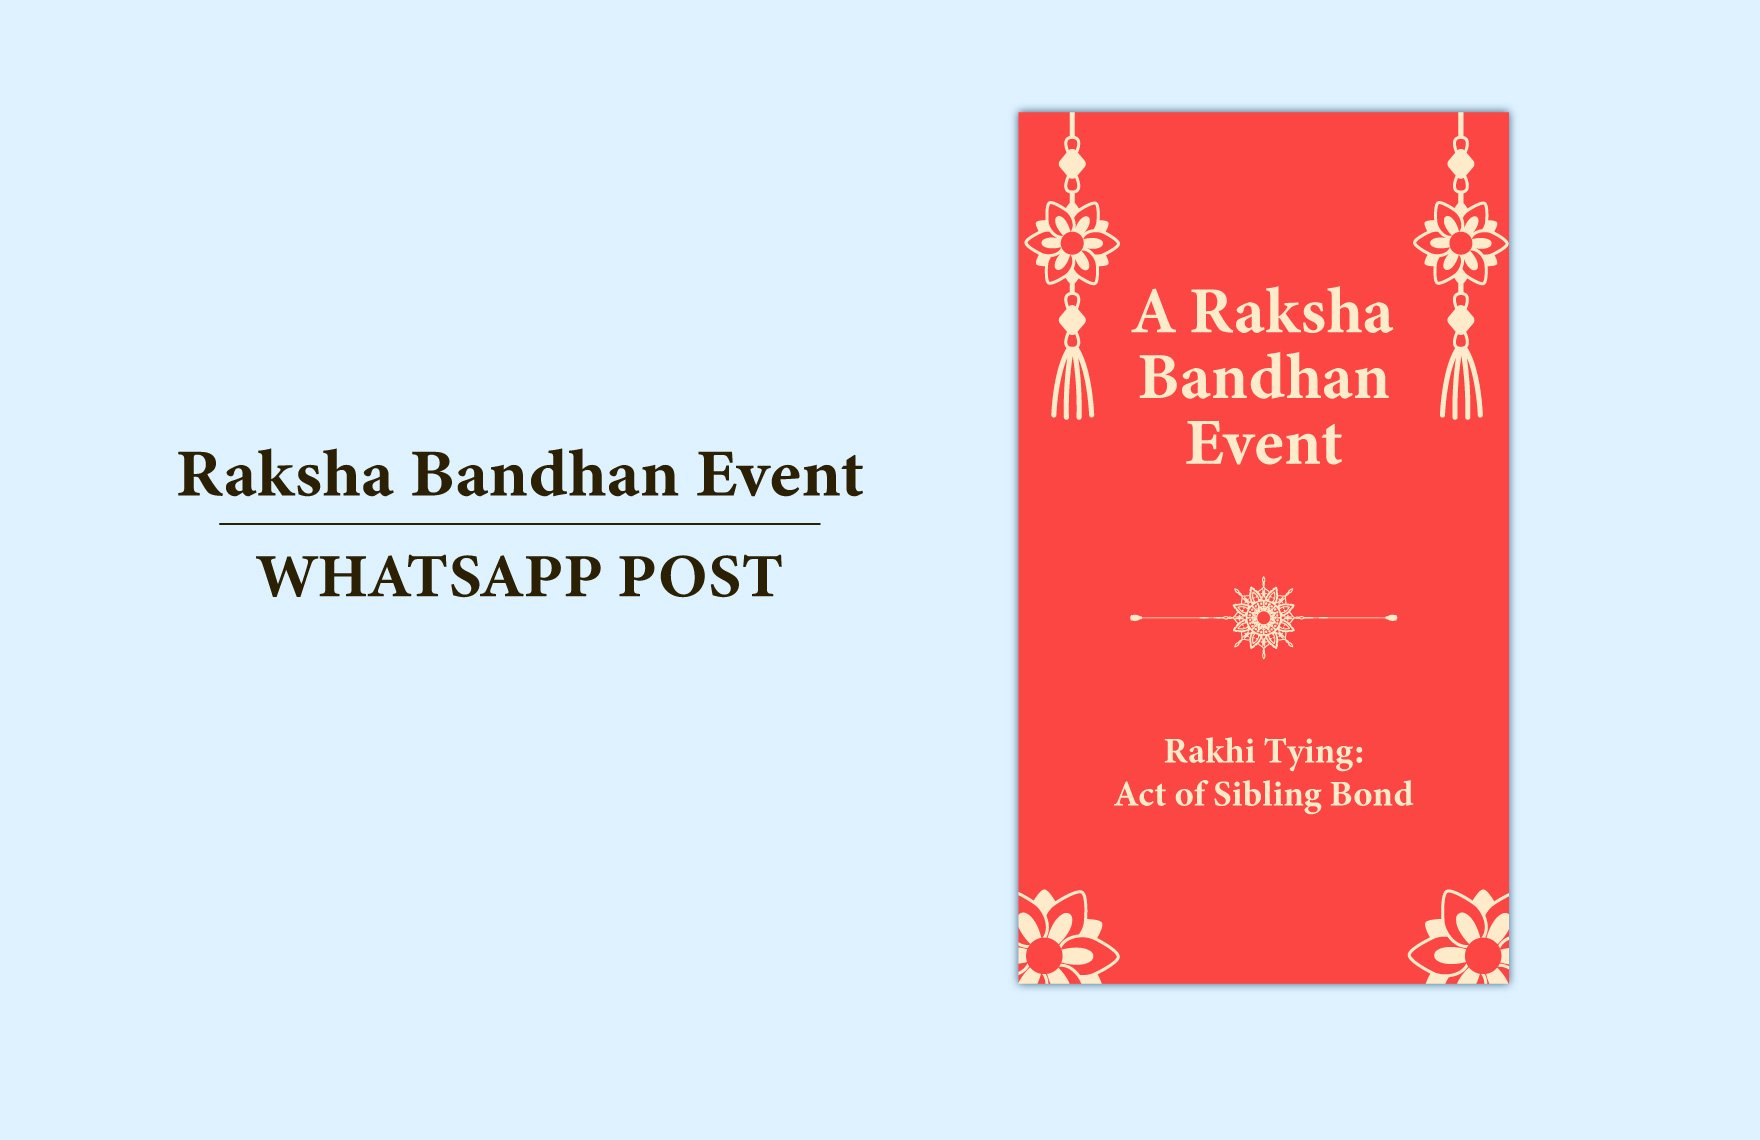 Free Raksha Bandhan Event Whatsapp Post Template in Illustrator, PSD, SVG, JPG